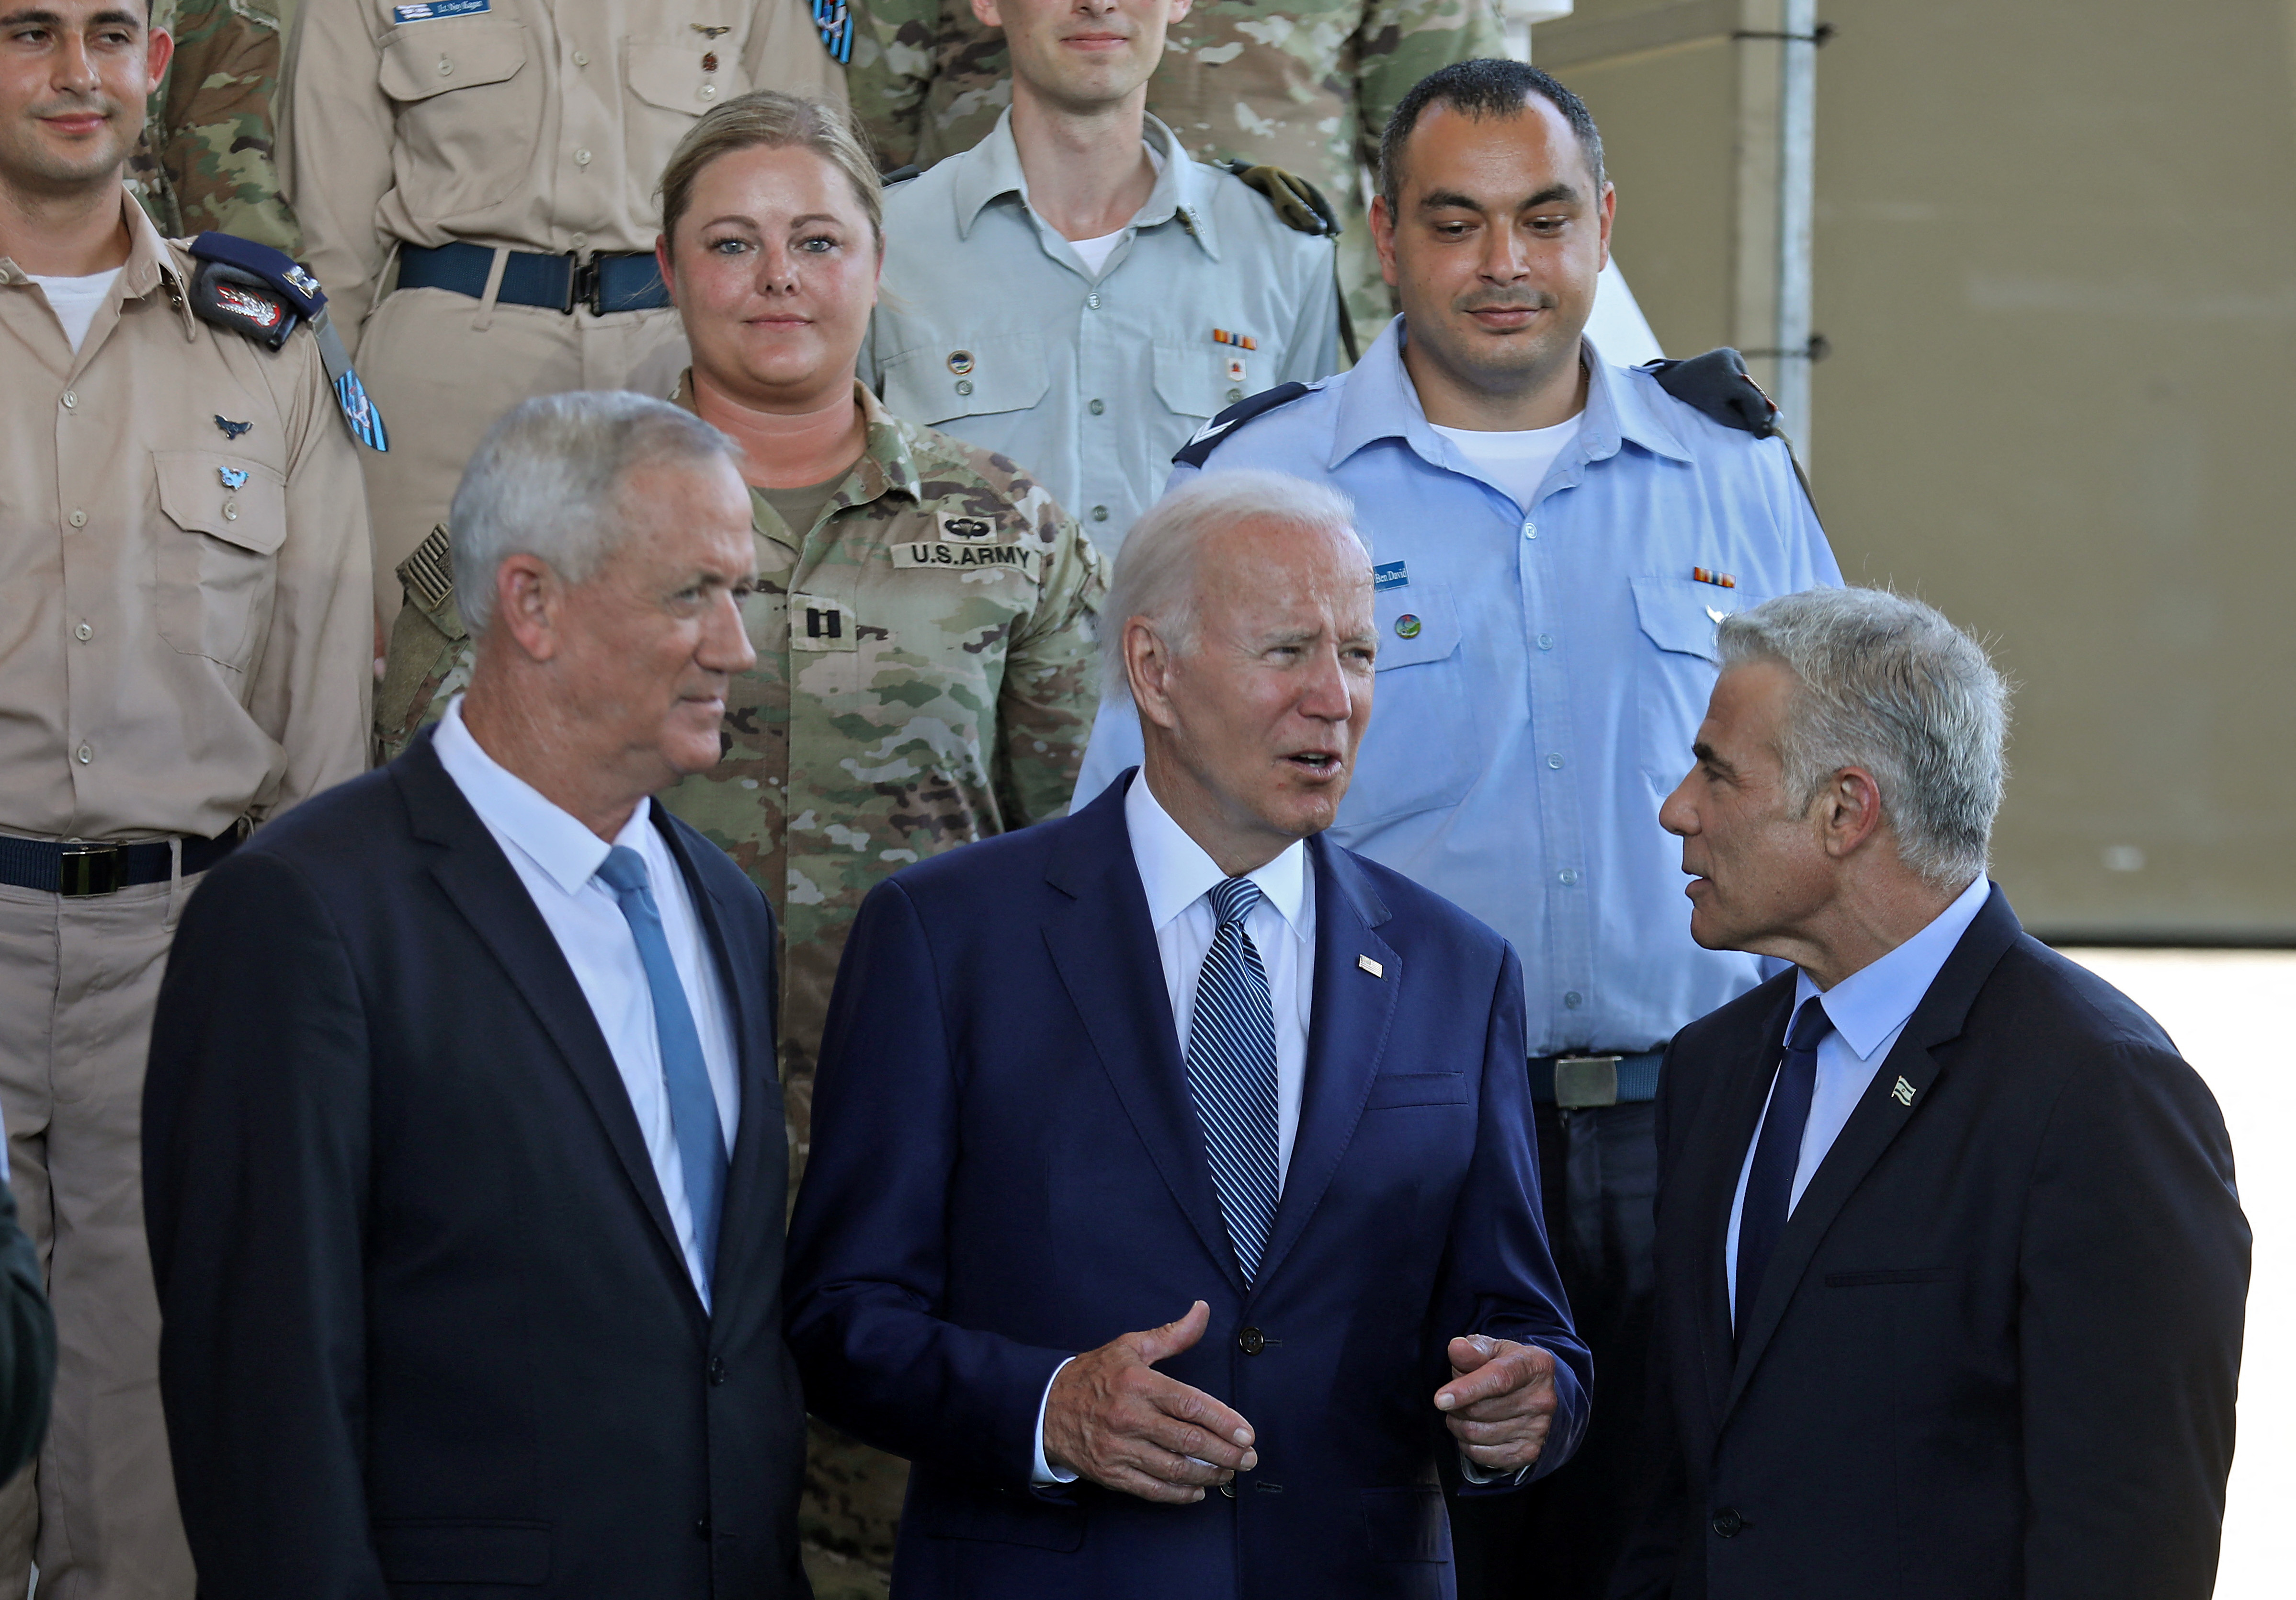 U.S. President Biden visits Israel